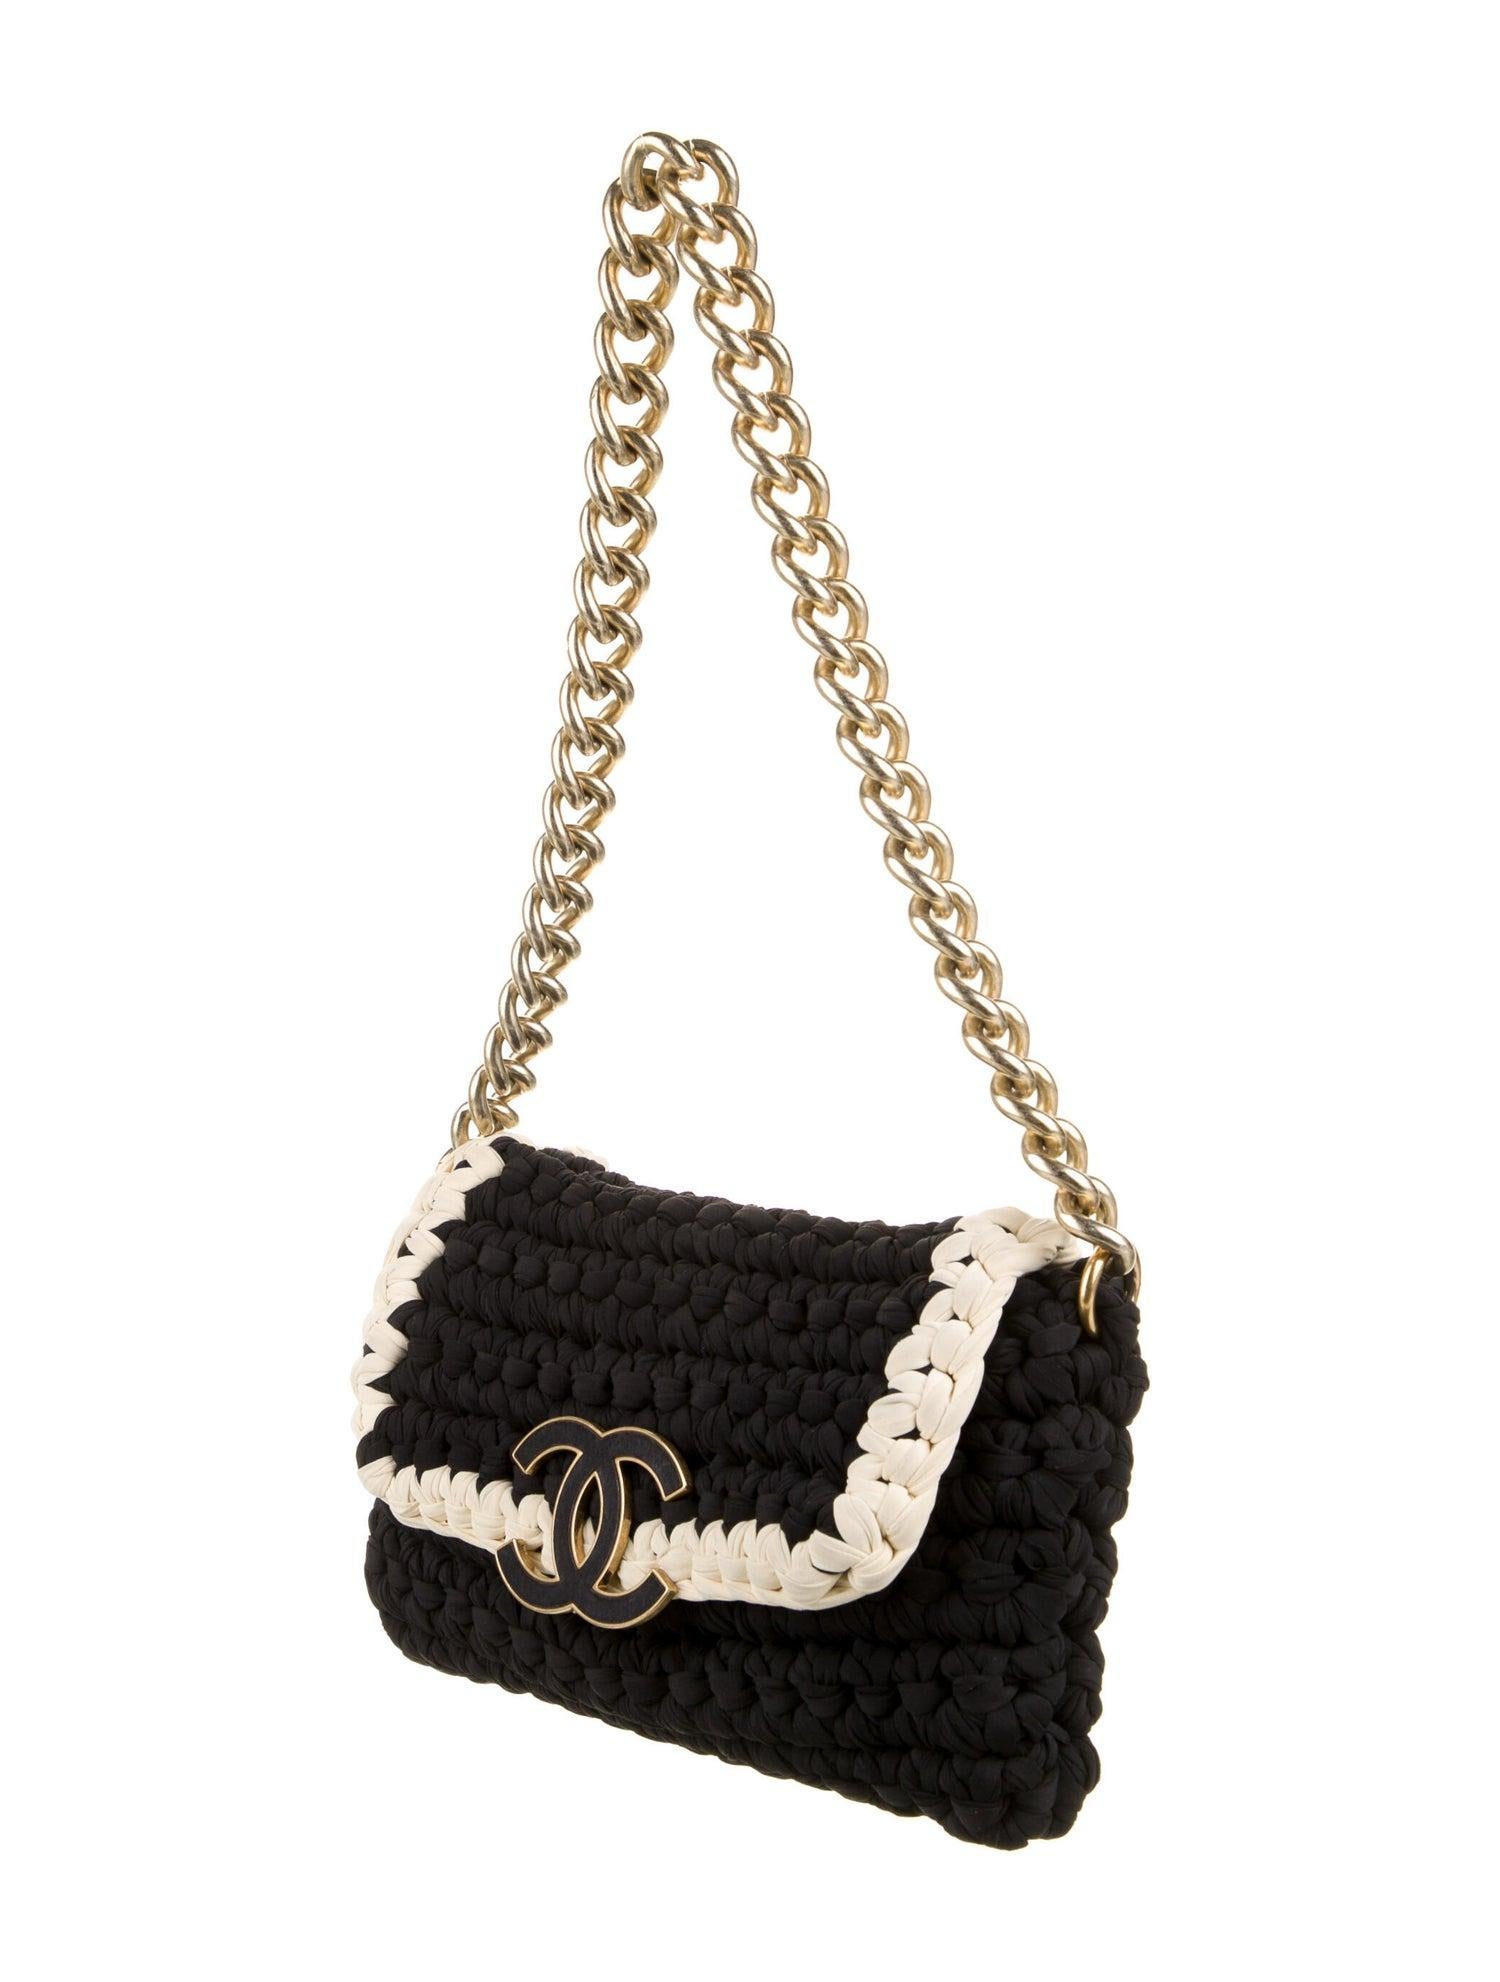 Chanel Interwoven Woven Crochet Bicolor Two Tone Medium Black & White Flap Bag For Sale 4